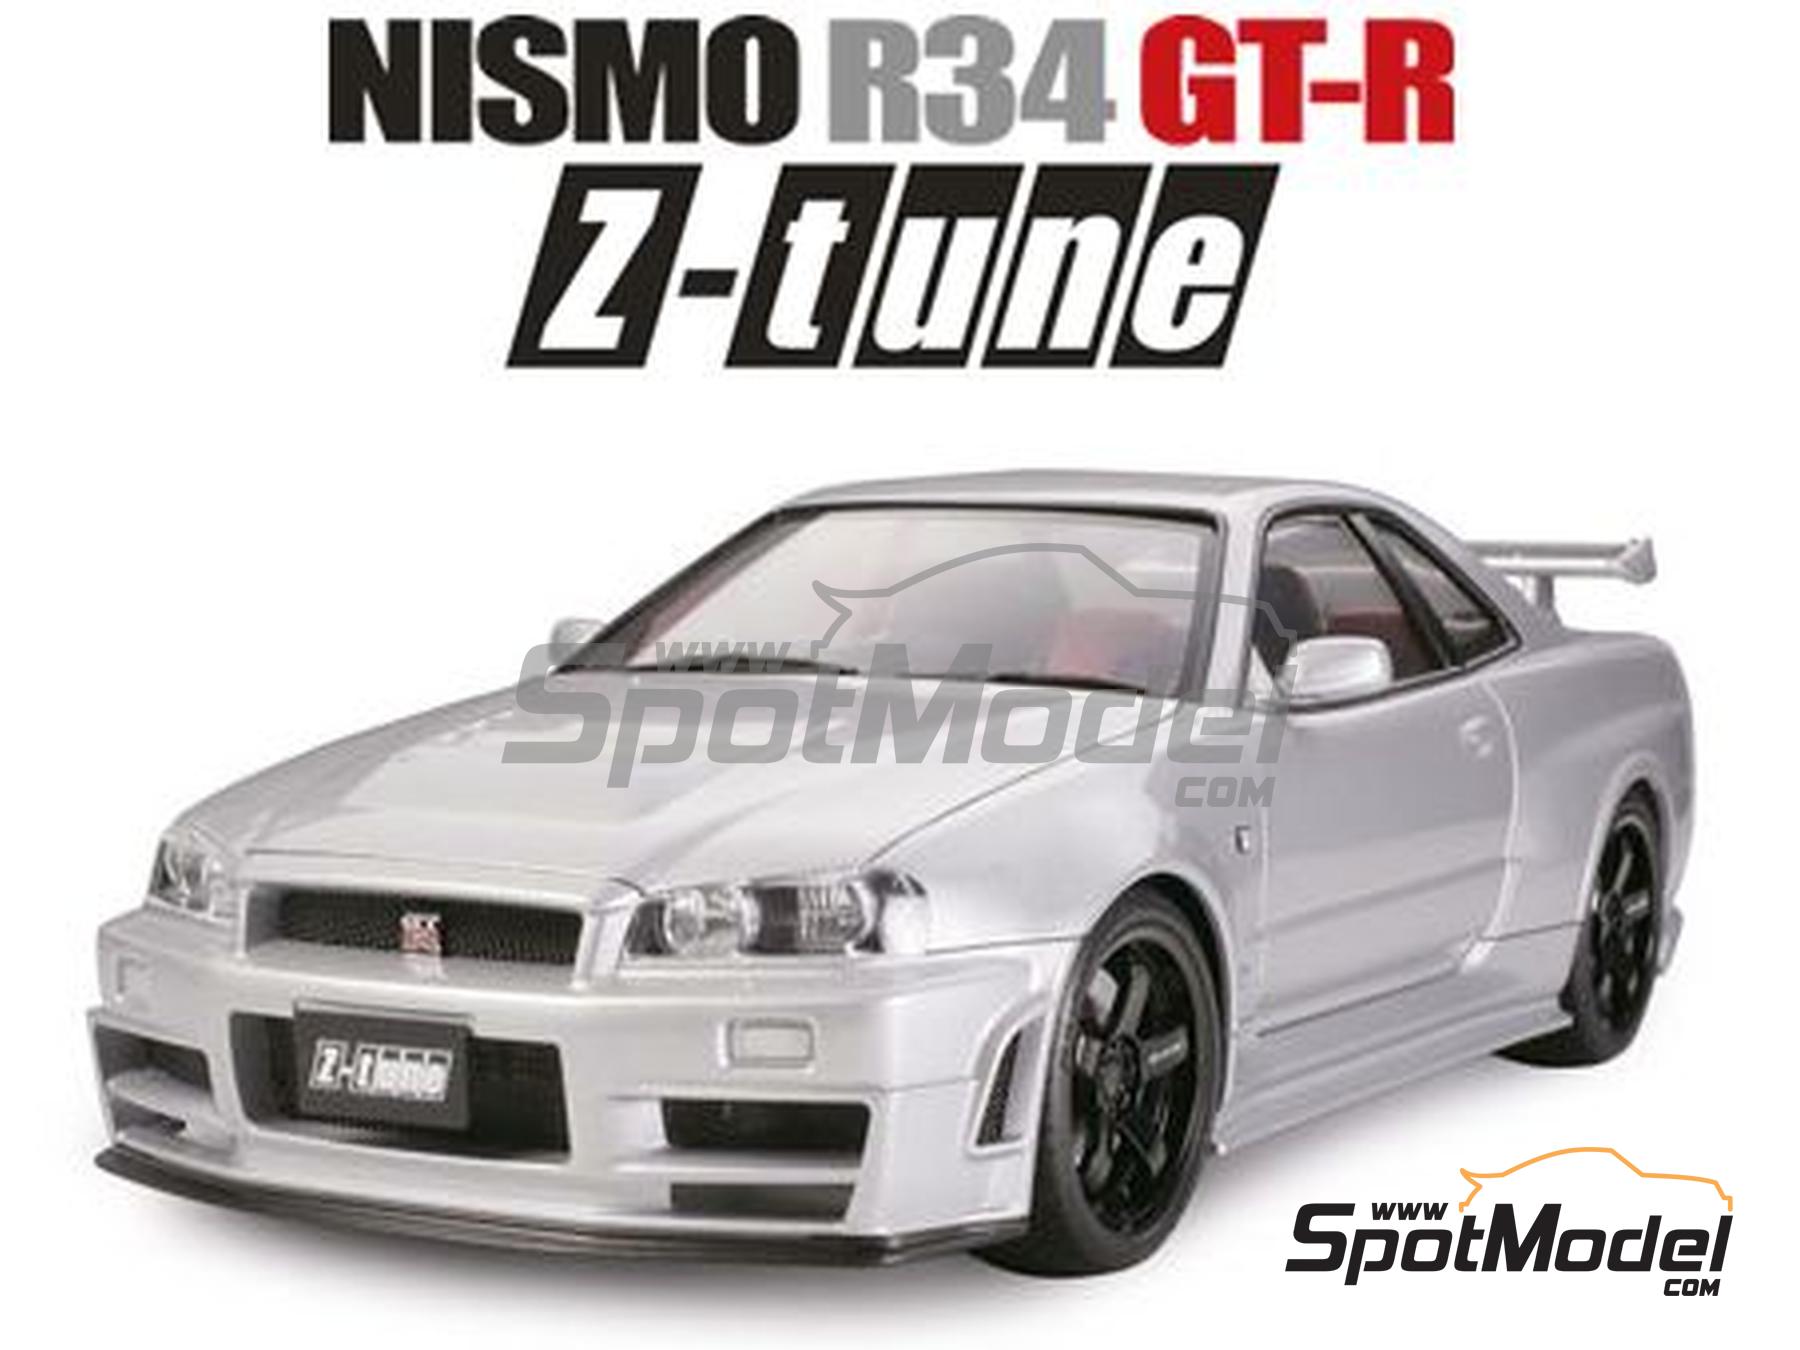  Tamiya Nissan Skyline GT-R R34 - Nismo Z-Tune 1/24 Scale Model  Kit 24282 : Arts, Crafts & Sewing